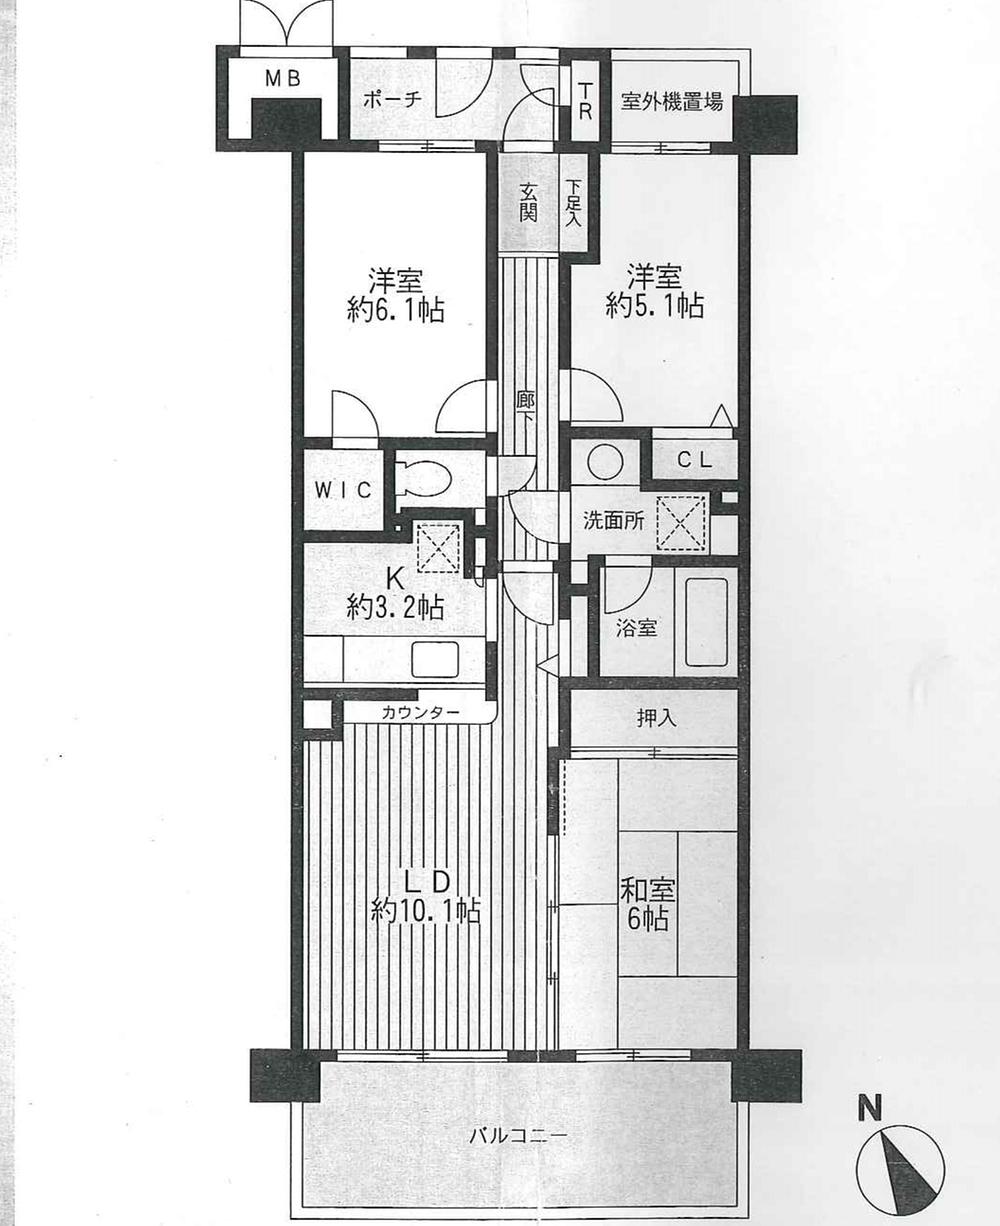 Floor plan. 3LDK, Price 20.8 million yen, Footprint 67.8 sq m , Balcony area 12 sq m